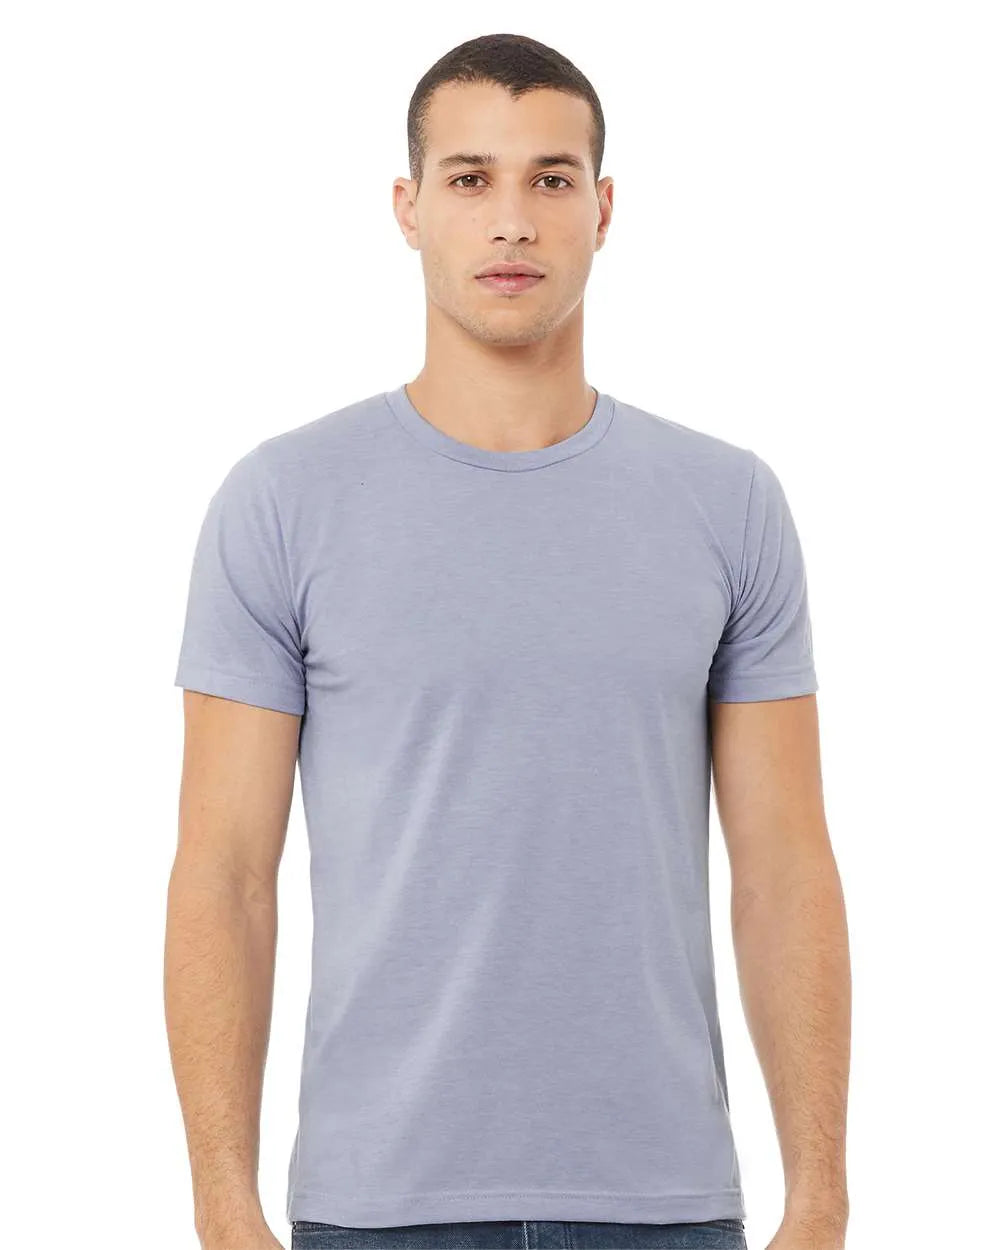 Unisex CVC Jersey Tee - 3001CVC - Print Me Shirts